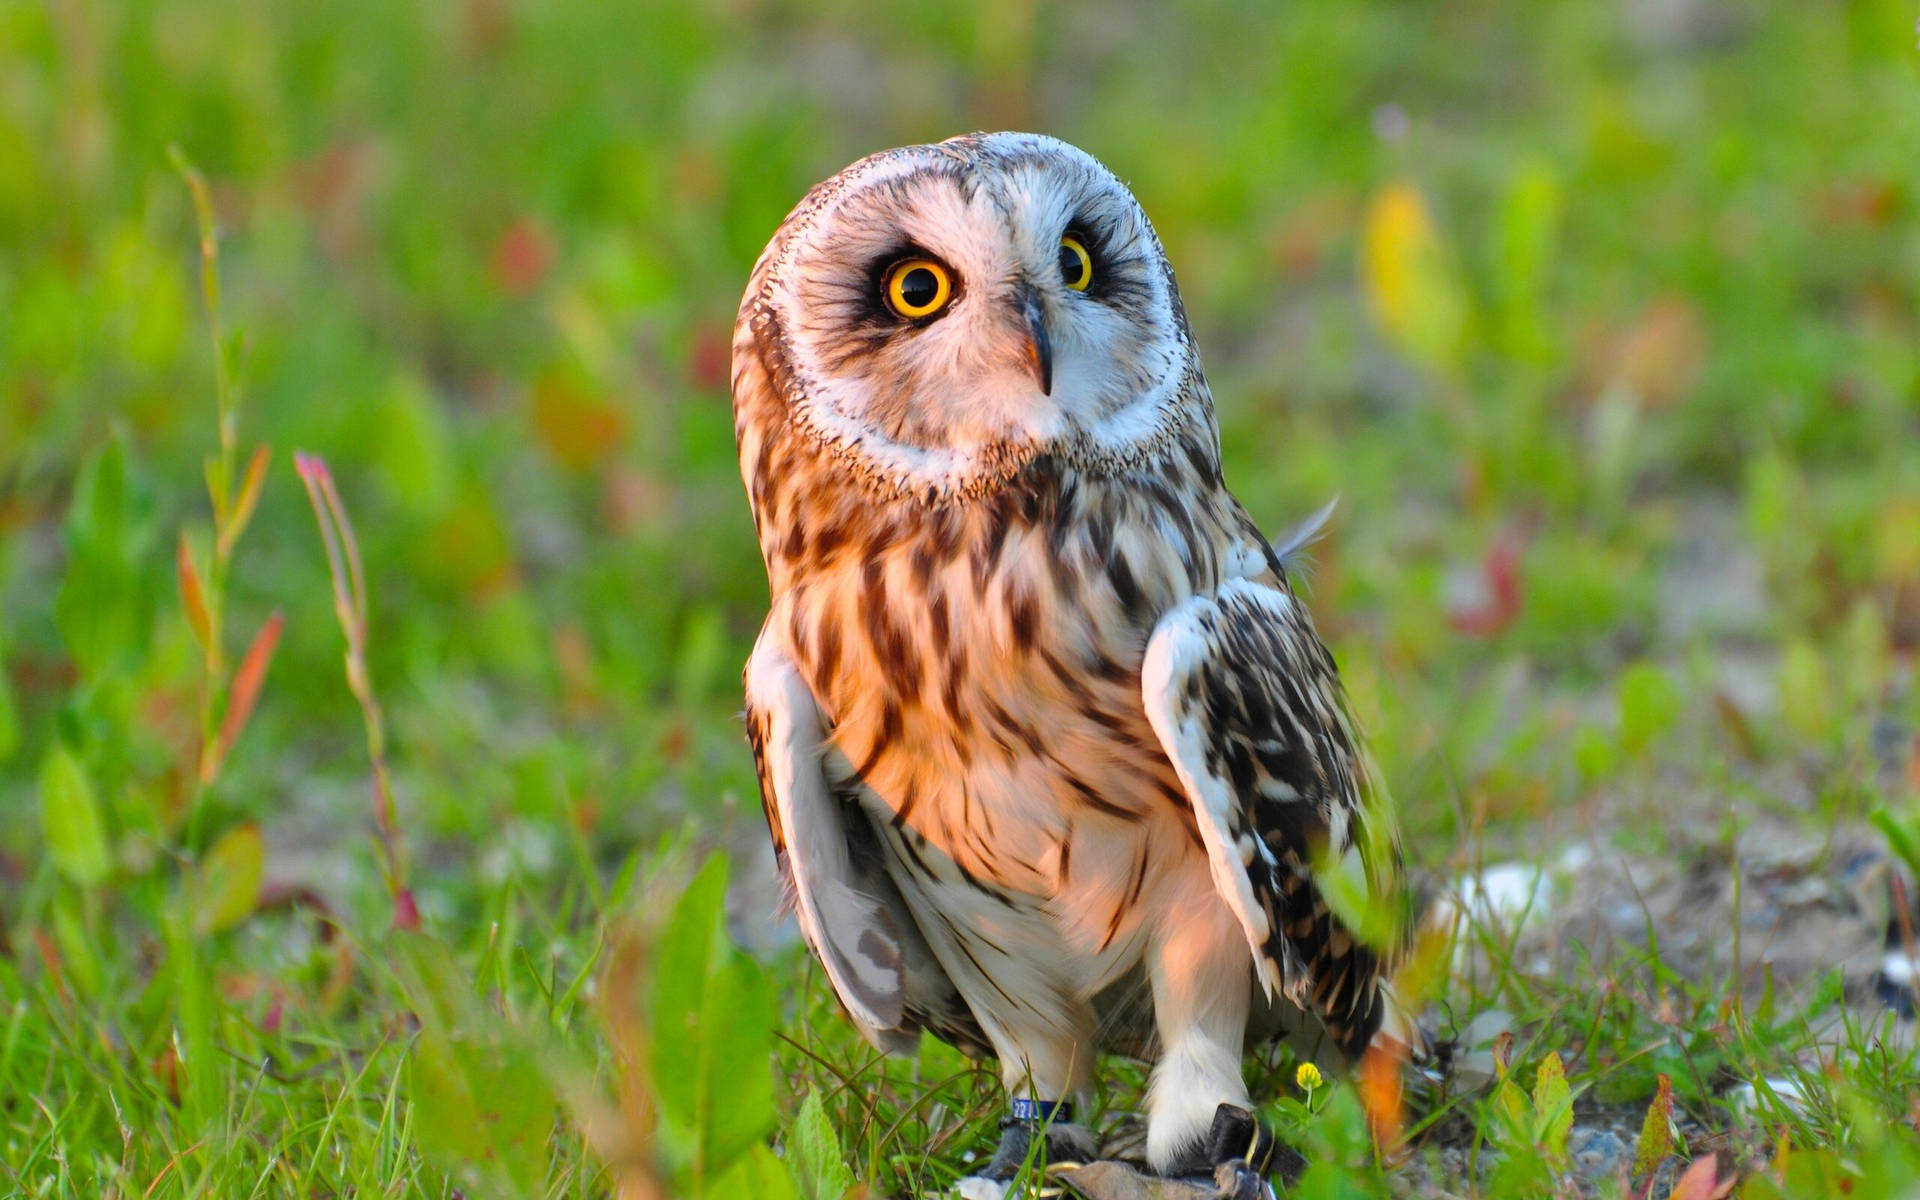 Cute Baby Owl On Grass